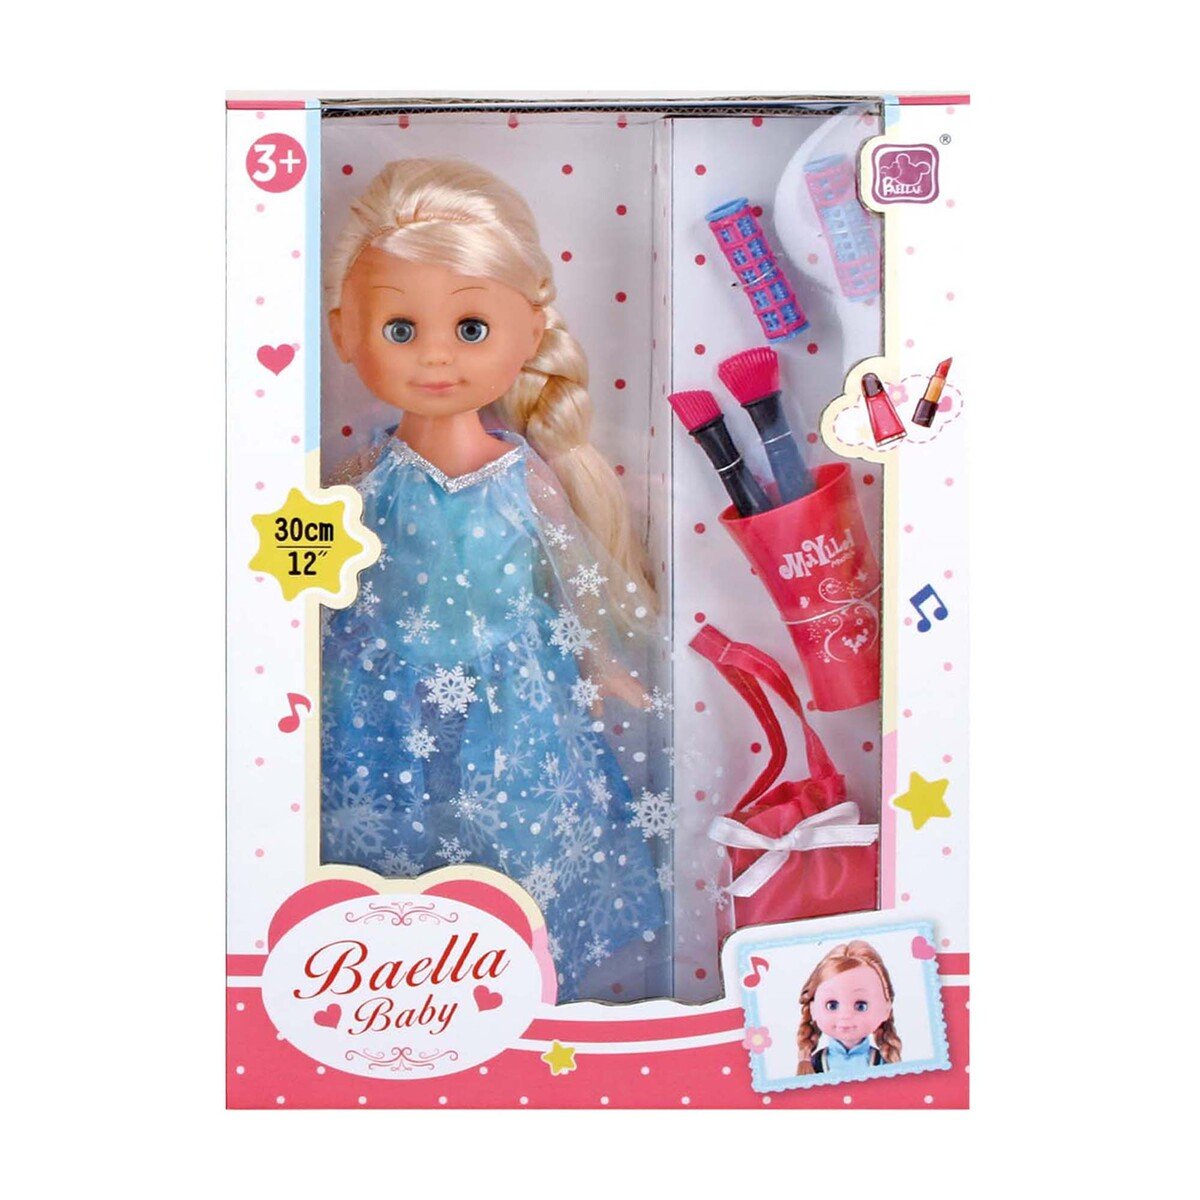 Fabiola Beauty Doll 14499 Assorted 